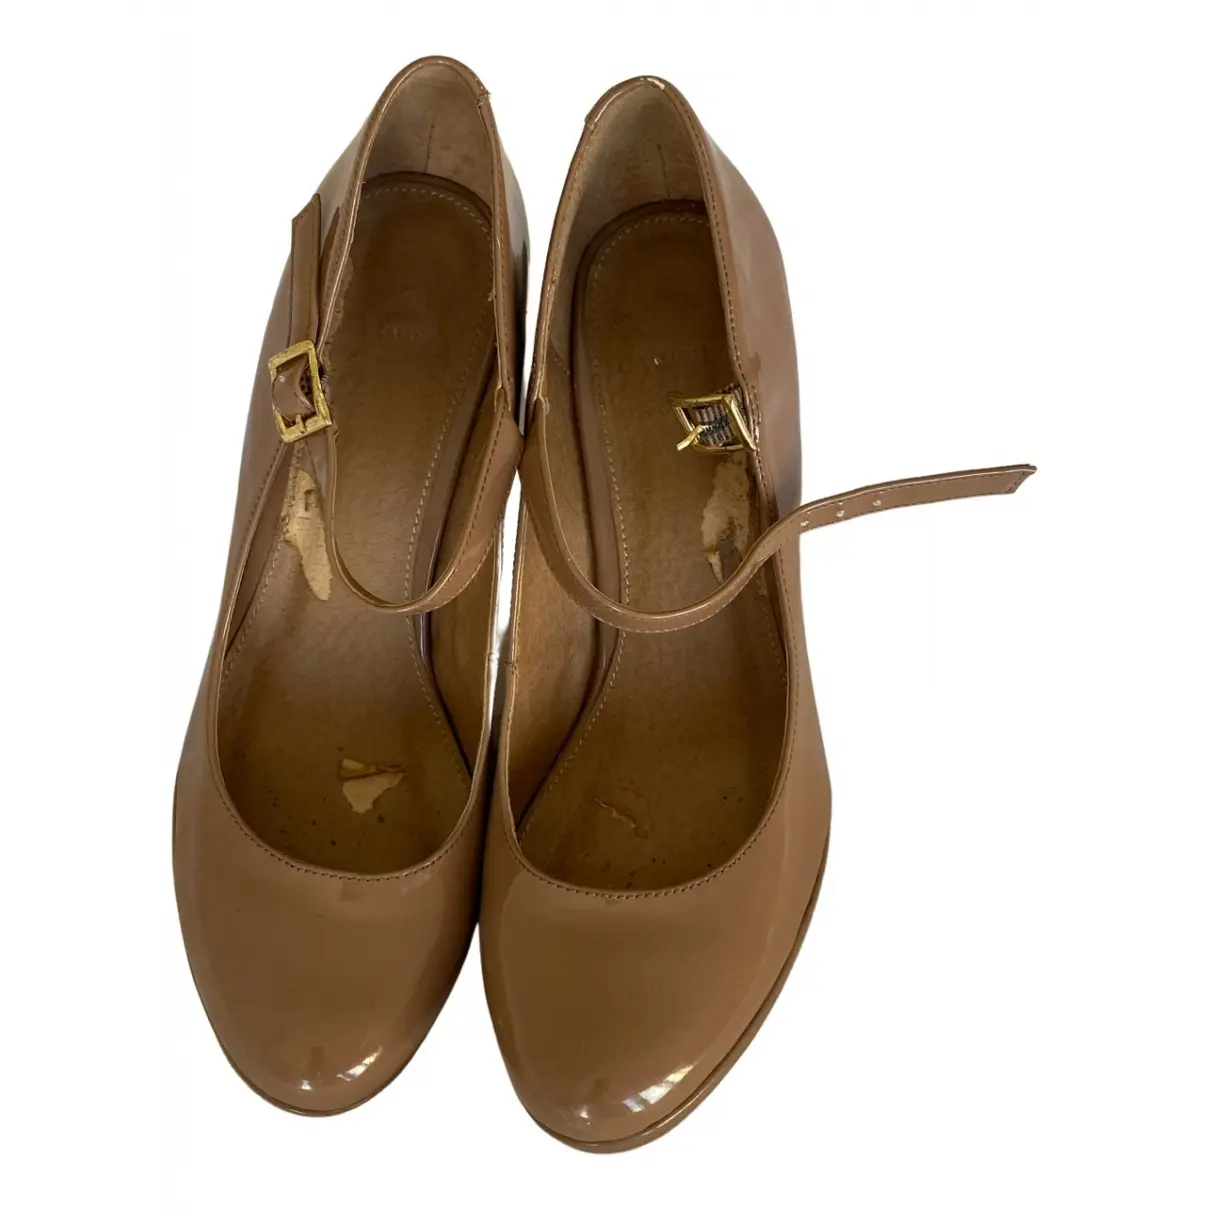 Patent leather heels Carvela